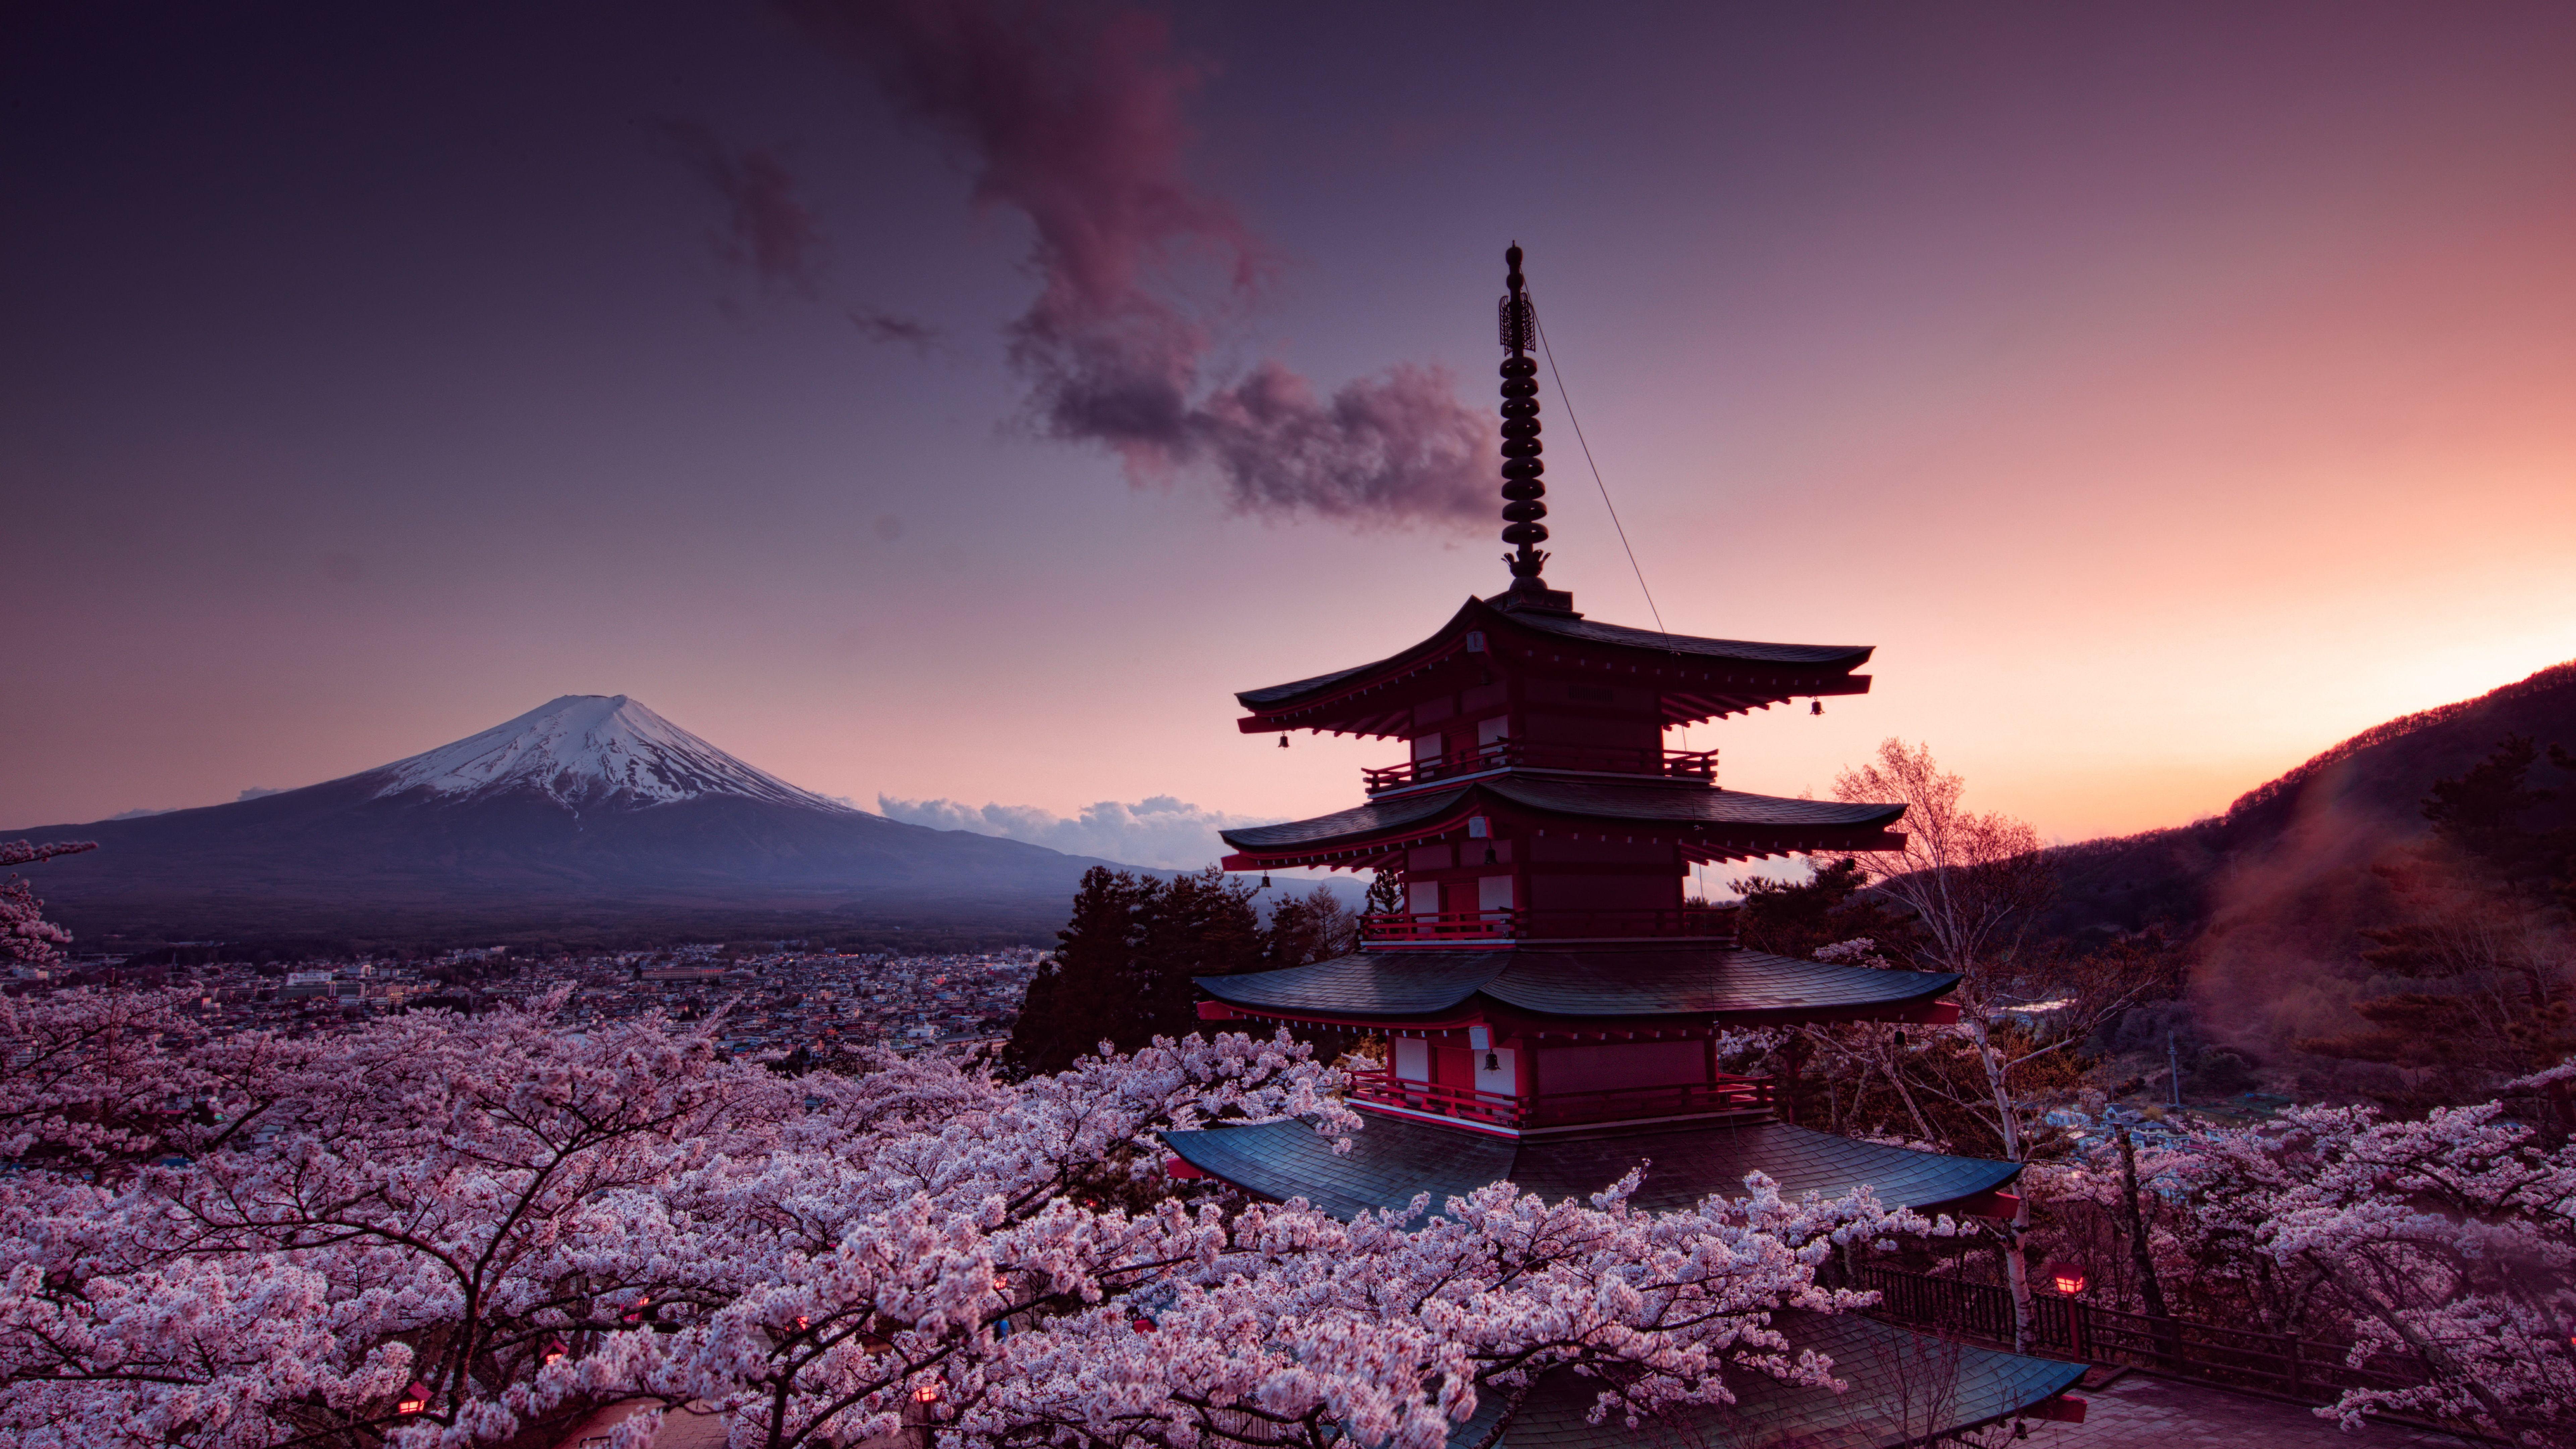 Churei Tower Mount Fuji In Japan 8k 8k HD 4k